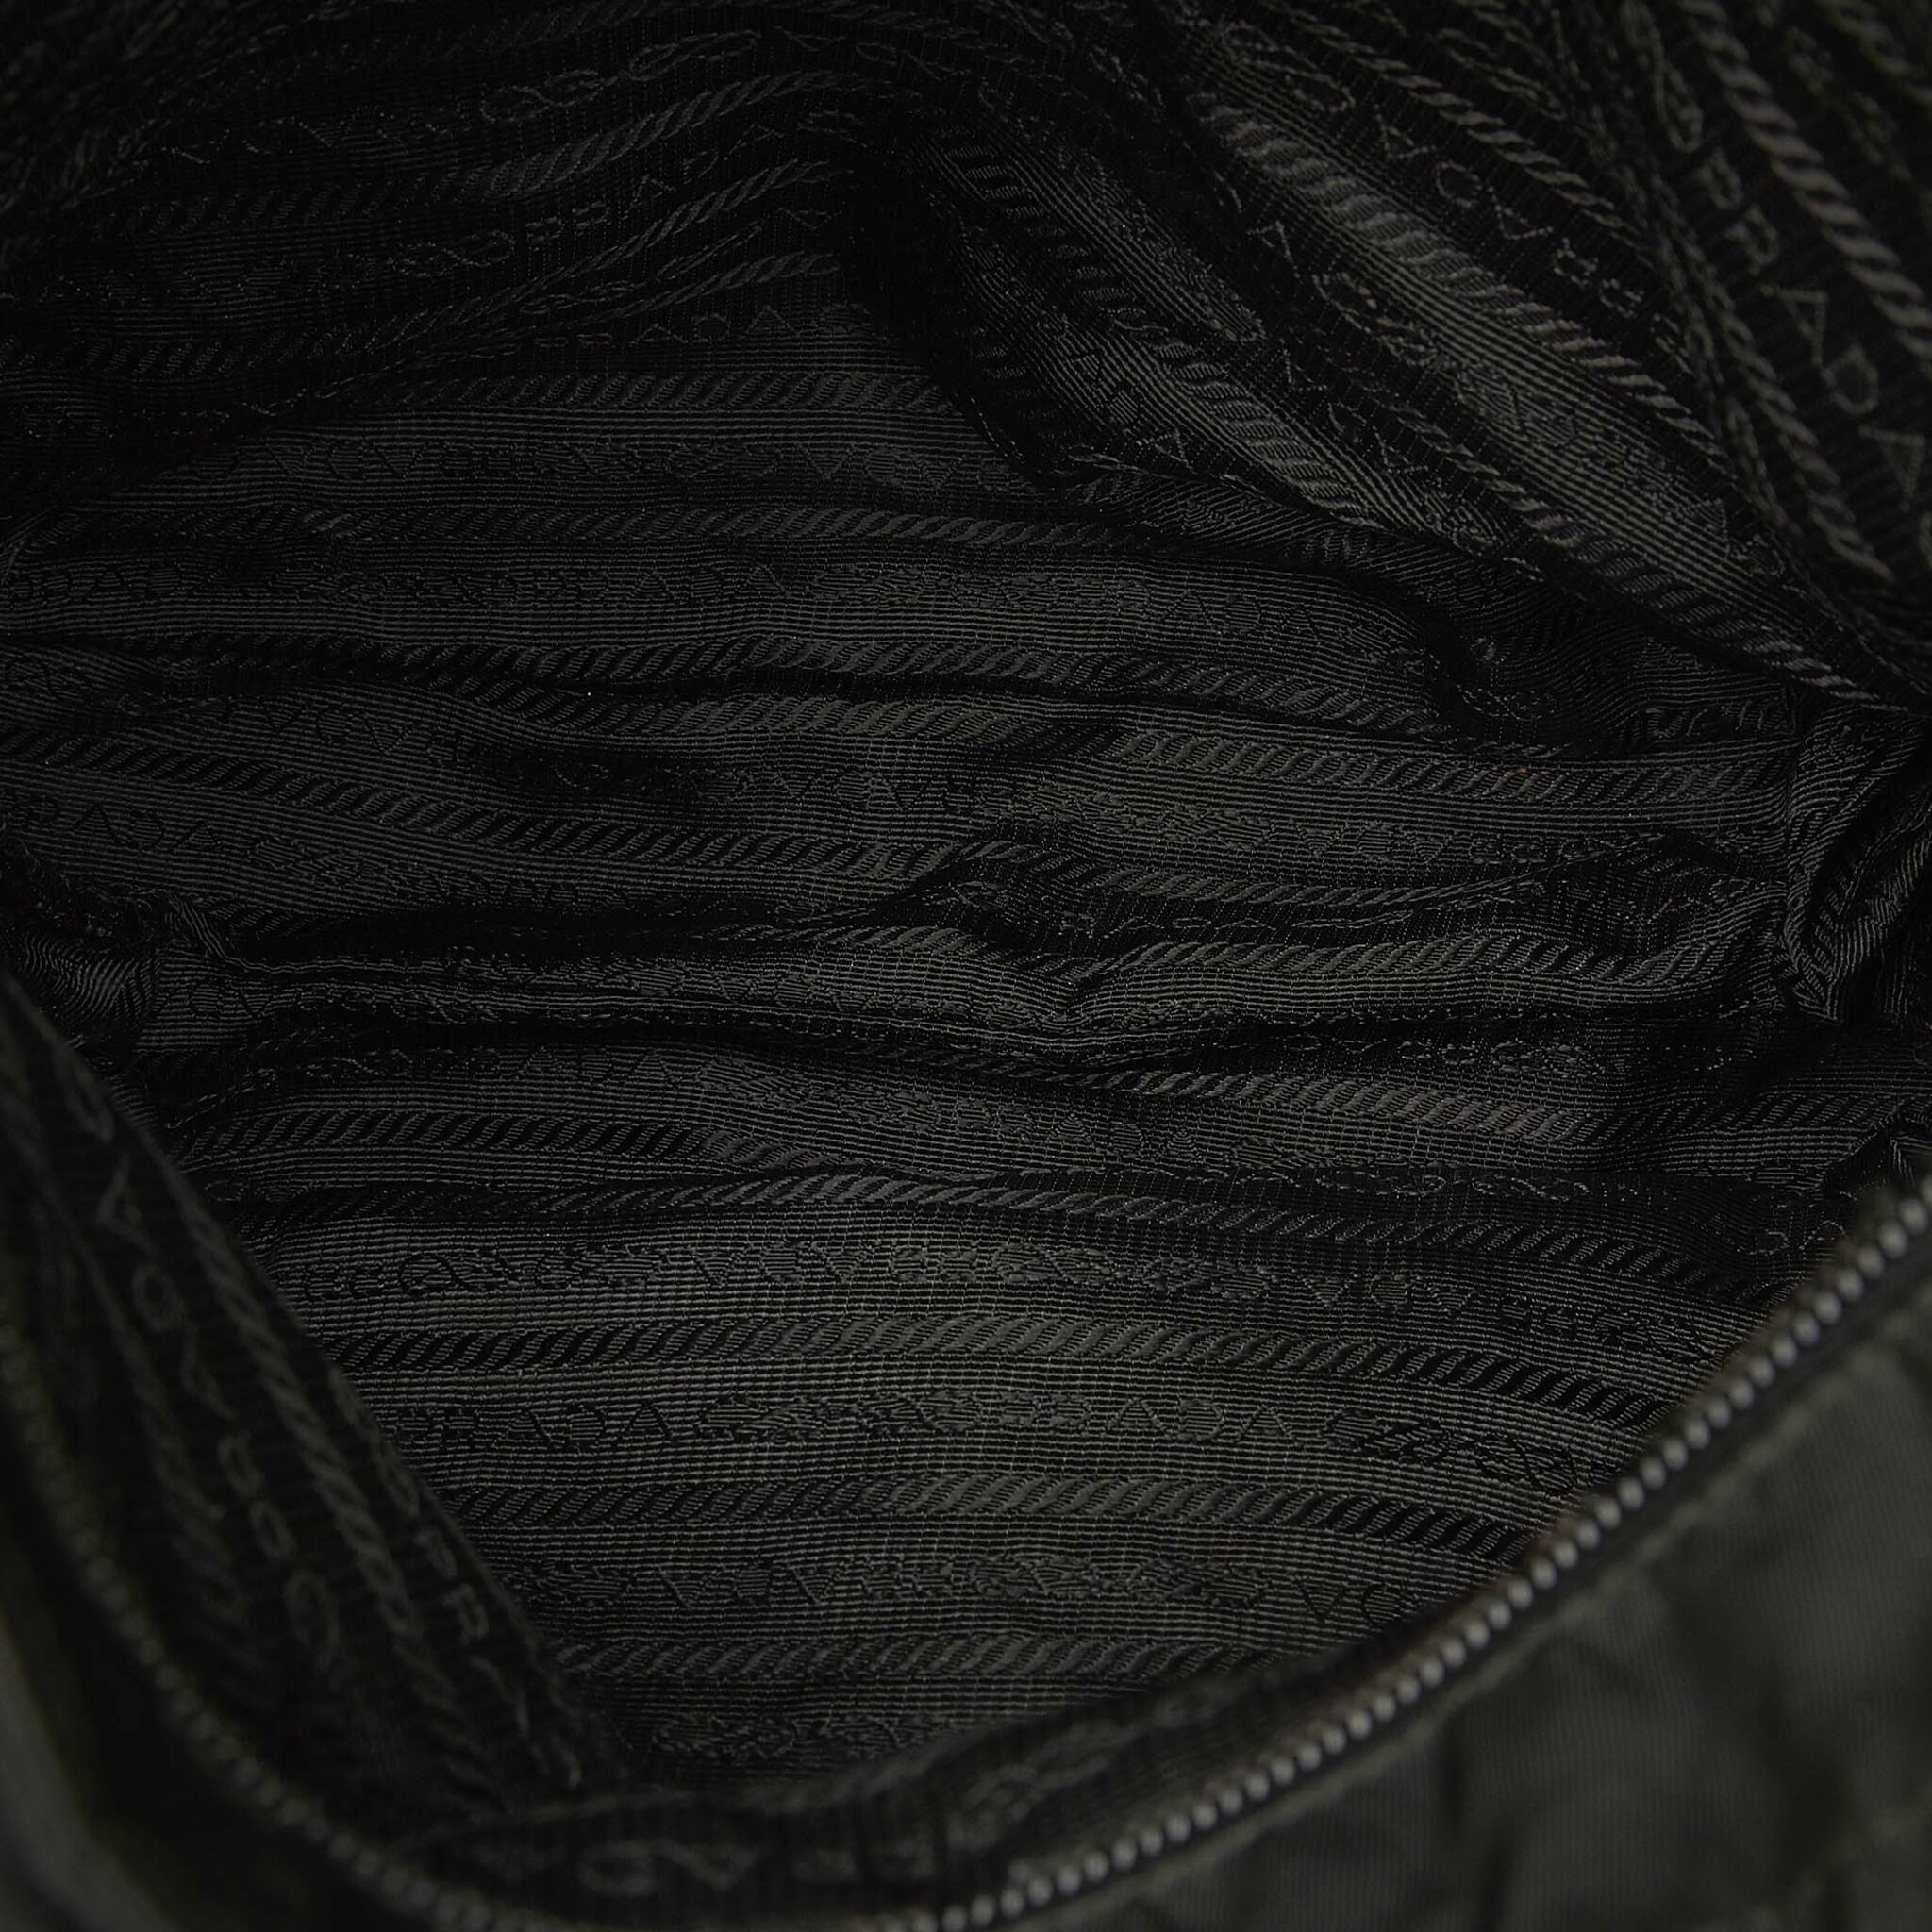 Prada Tessuto Crossbody Bag, black